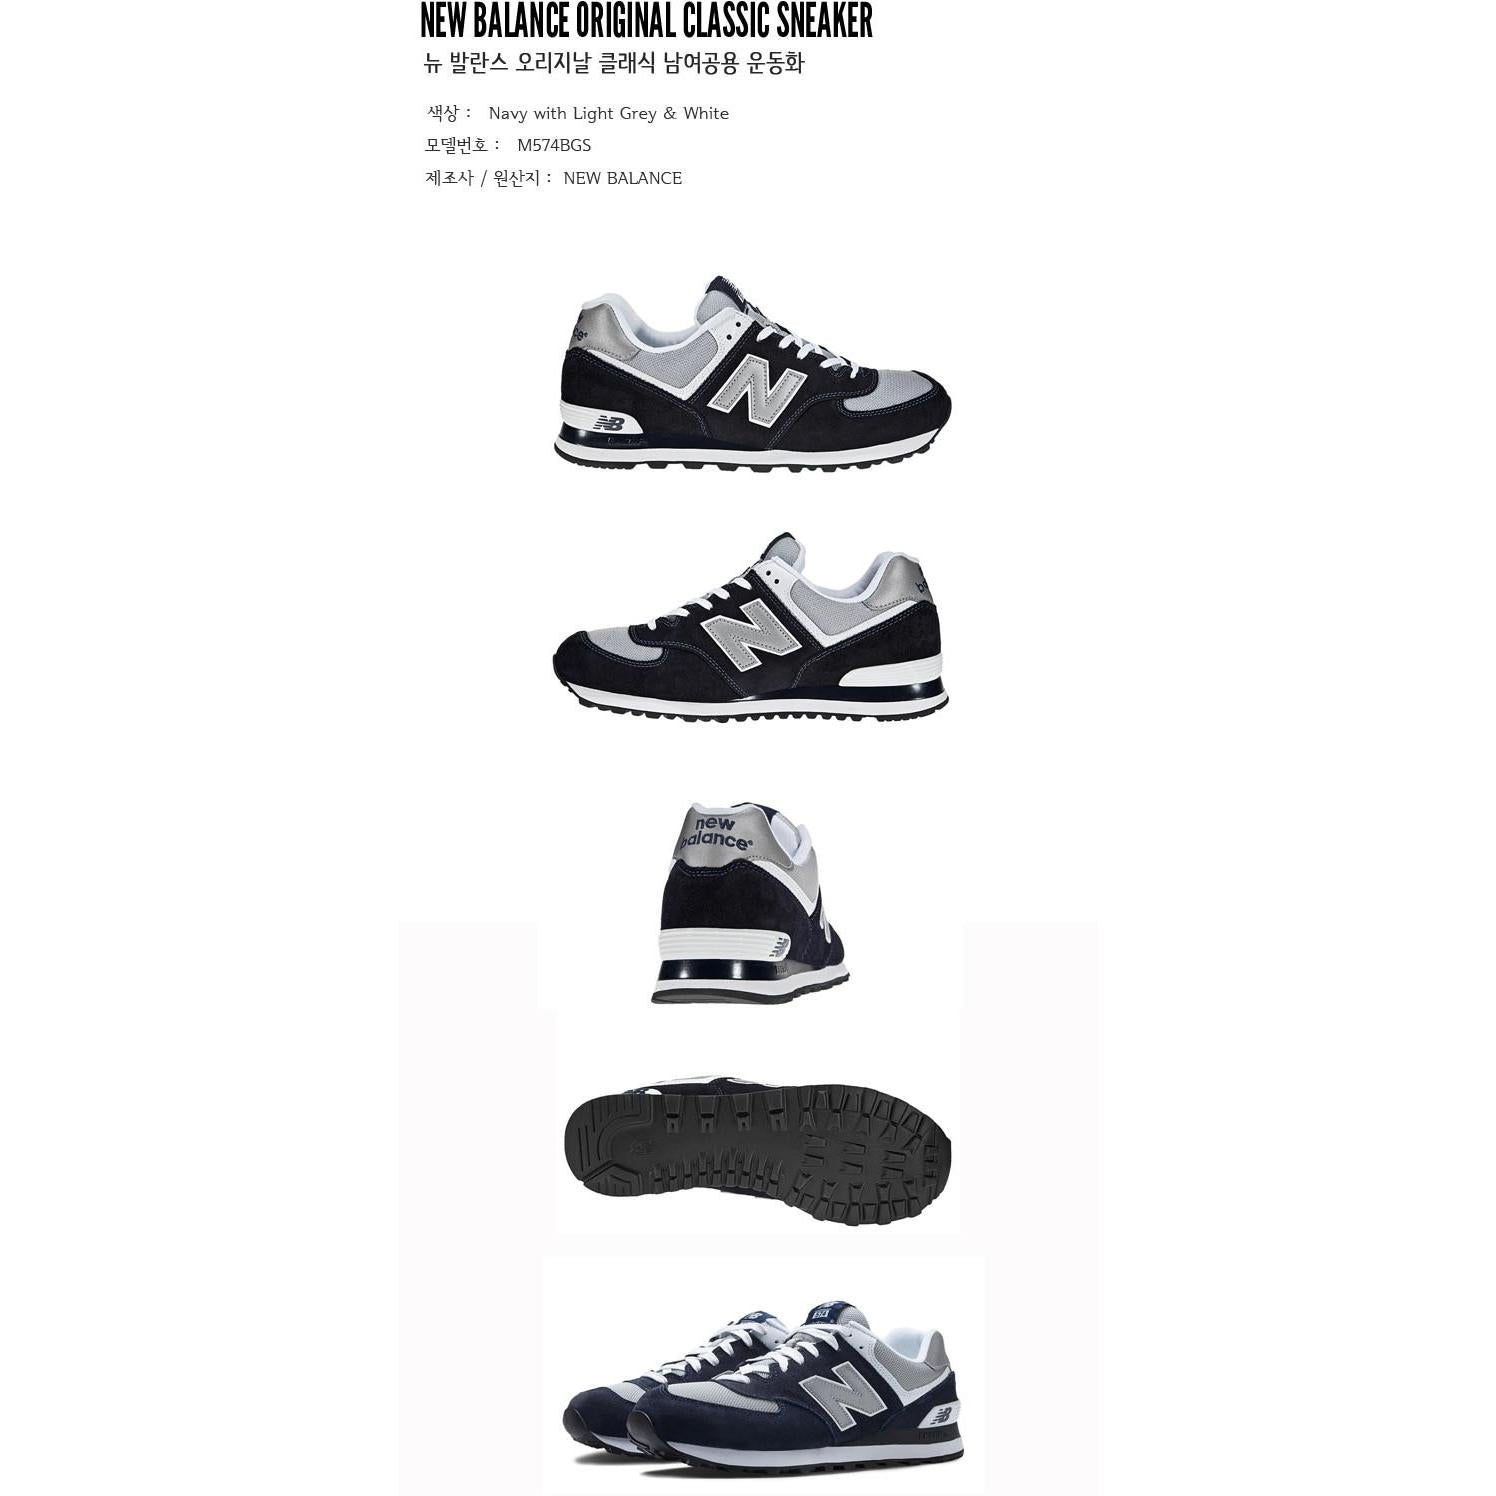 NEW BALANCE Original Classic Sneaker Navy with Light Grey&White M574BGS.